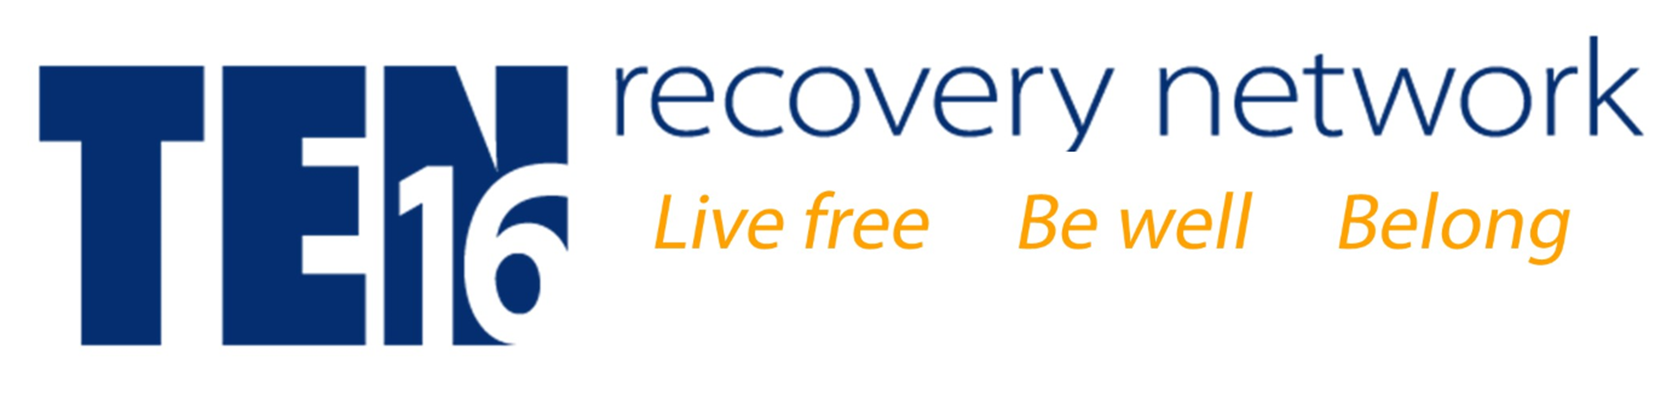 Ten16 Recovery Network logo